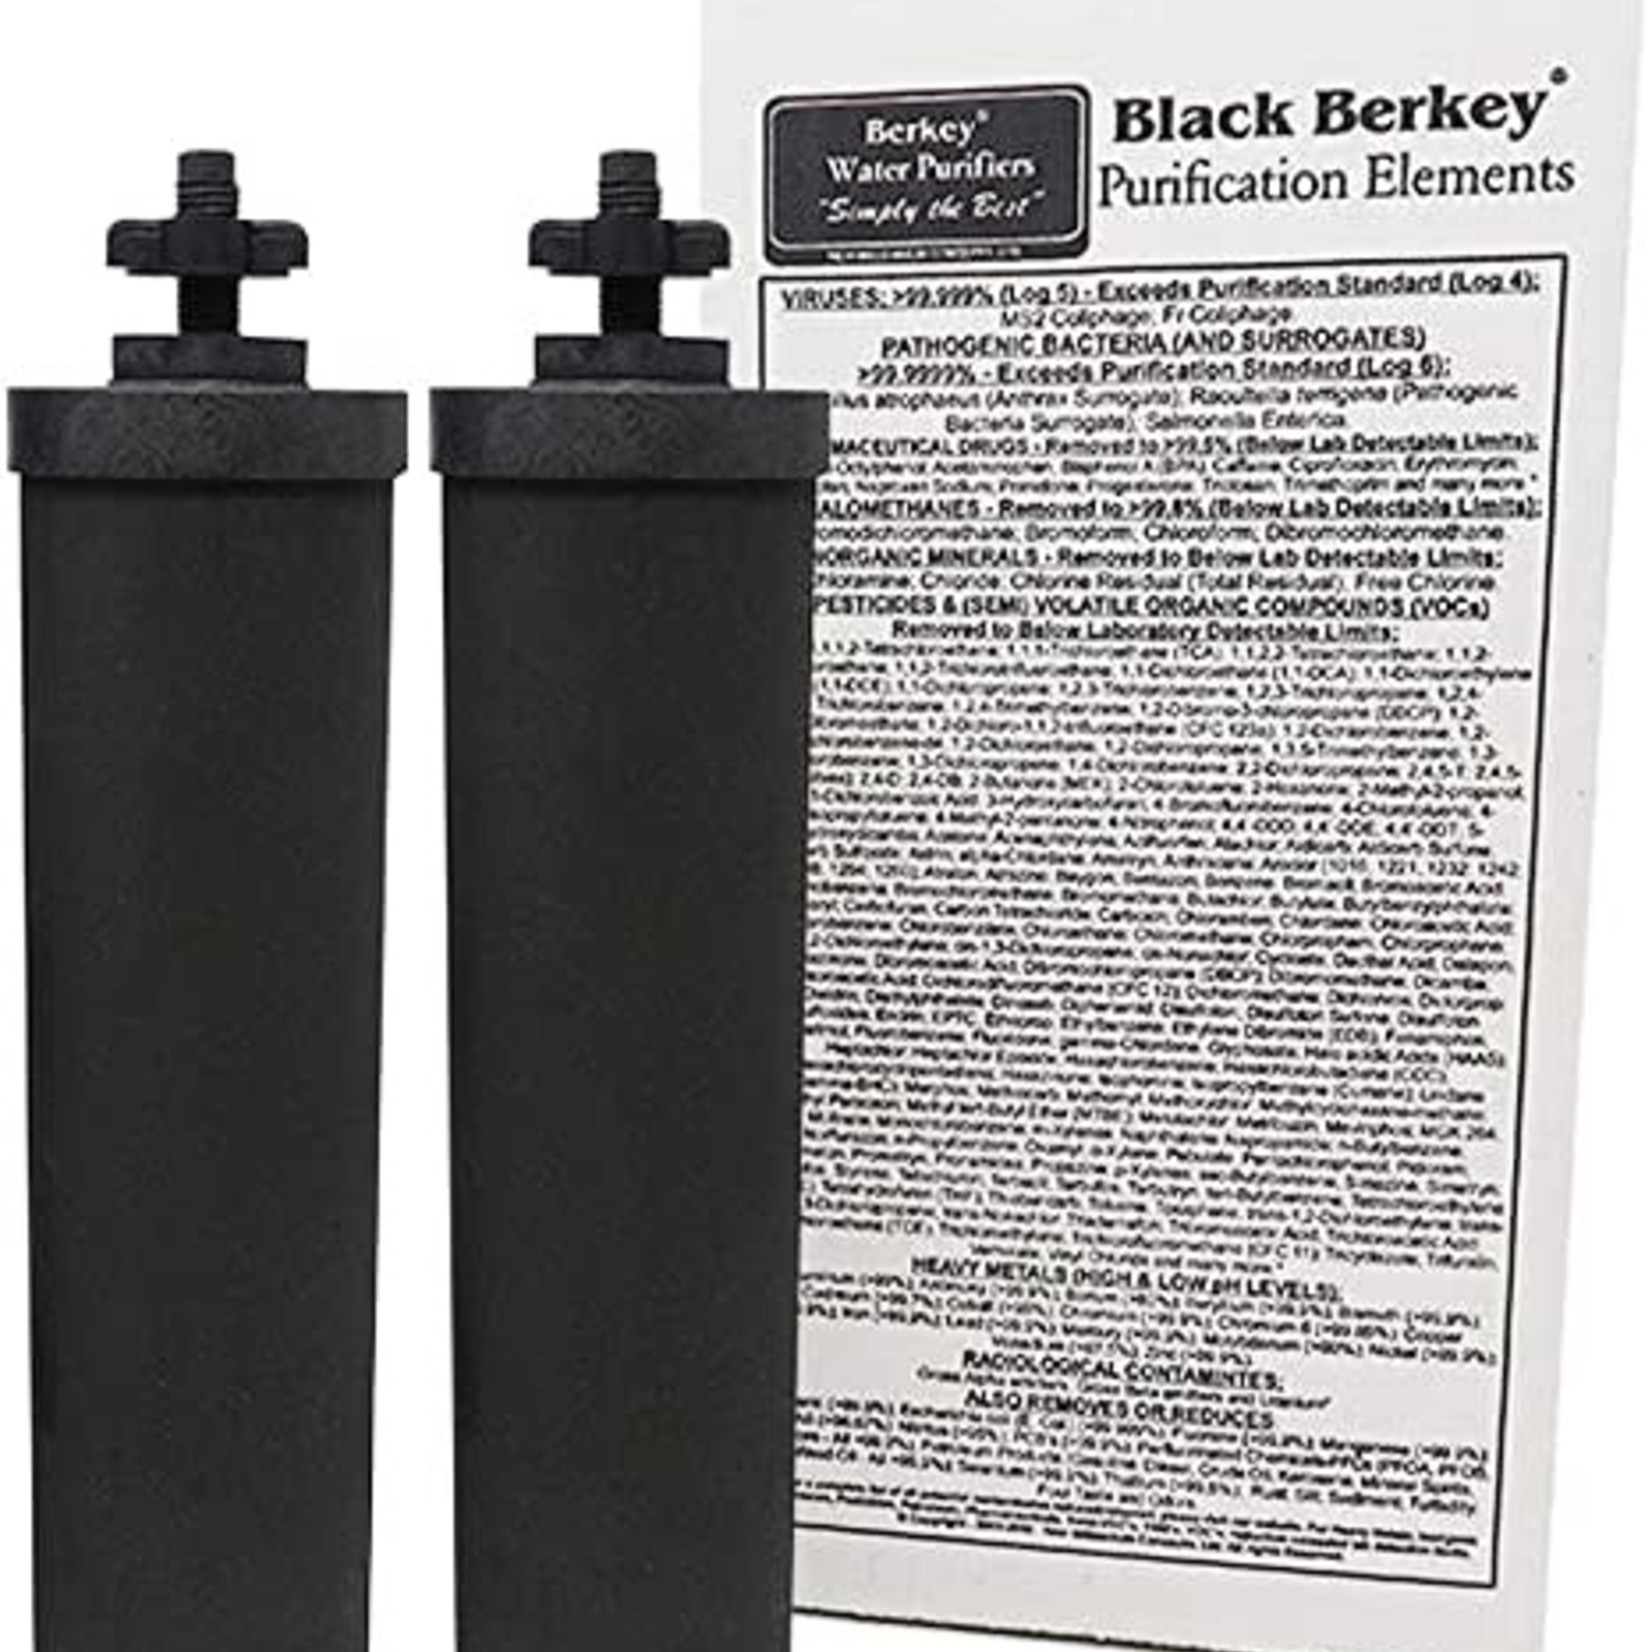 Berkey Travel Water Filter- Stainless Steel- With 2 Berkey Elements- Black